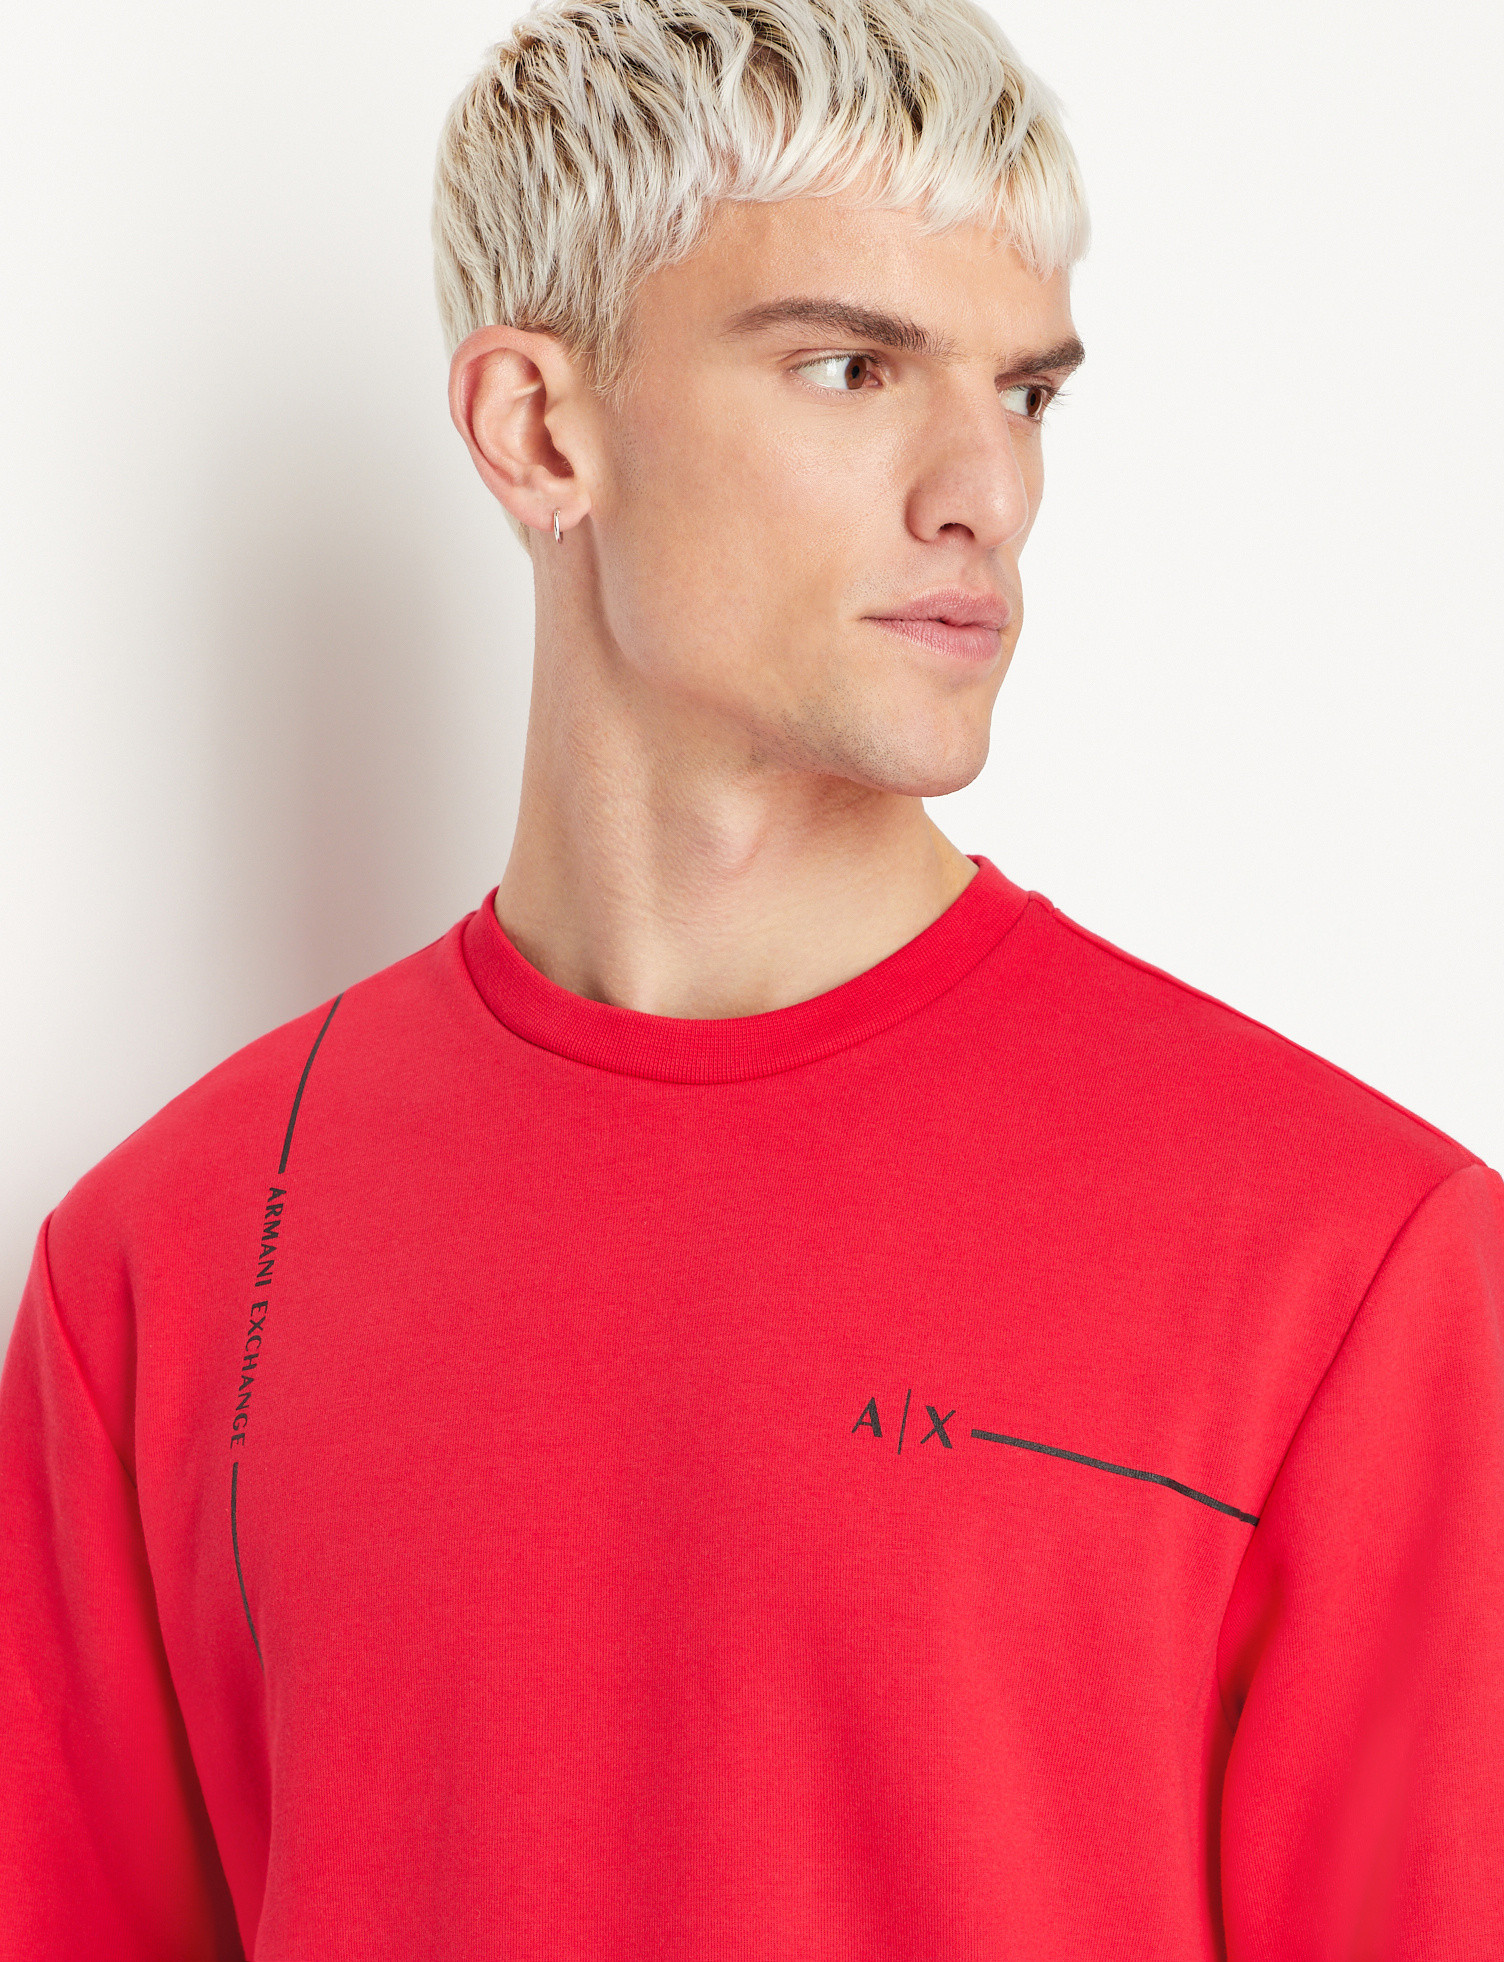 Armani Exchange - Sweatshirt with logo print, Red, large image number 3